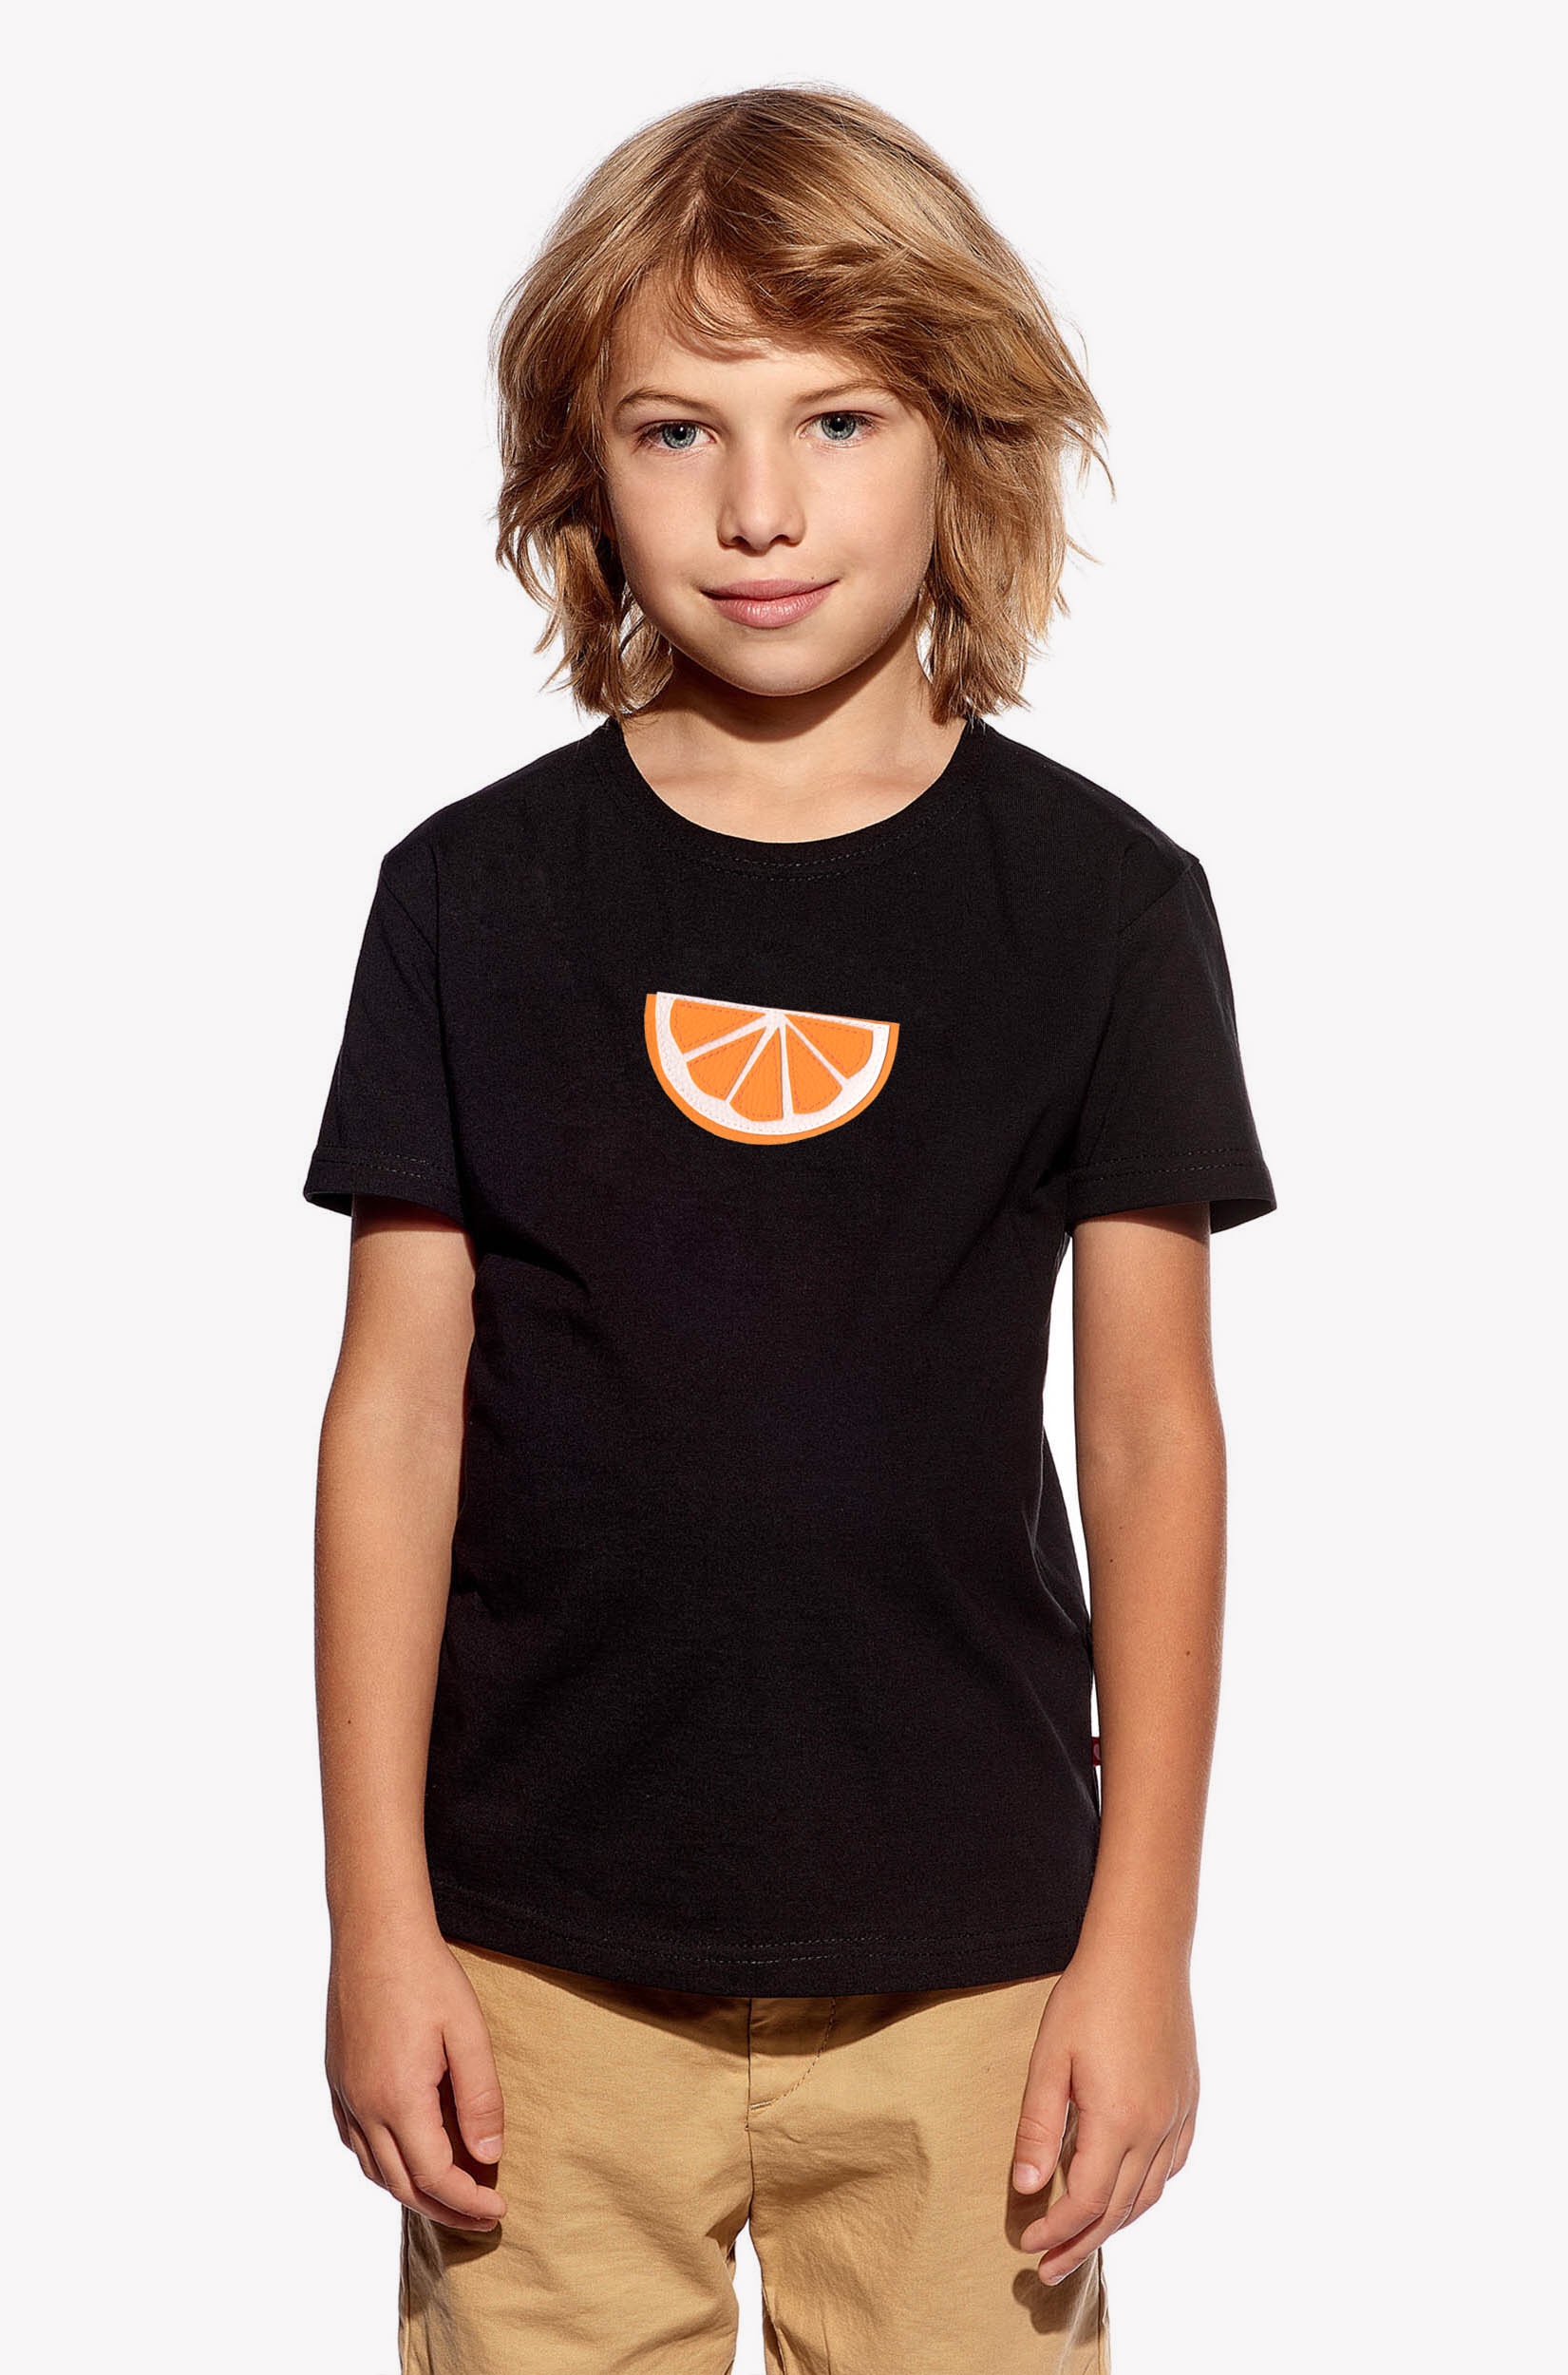 Shirt with orange